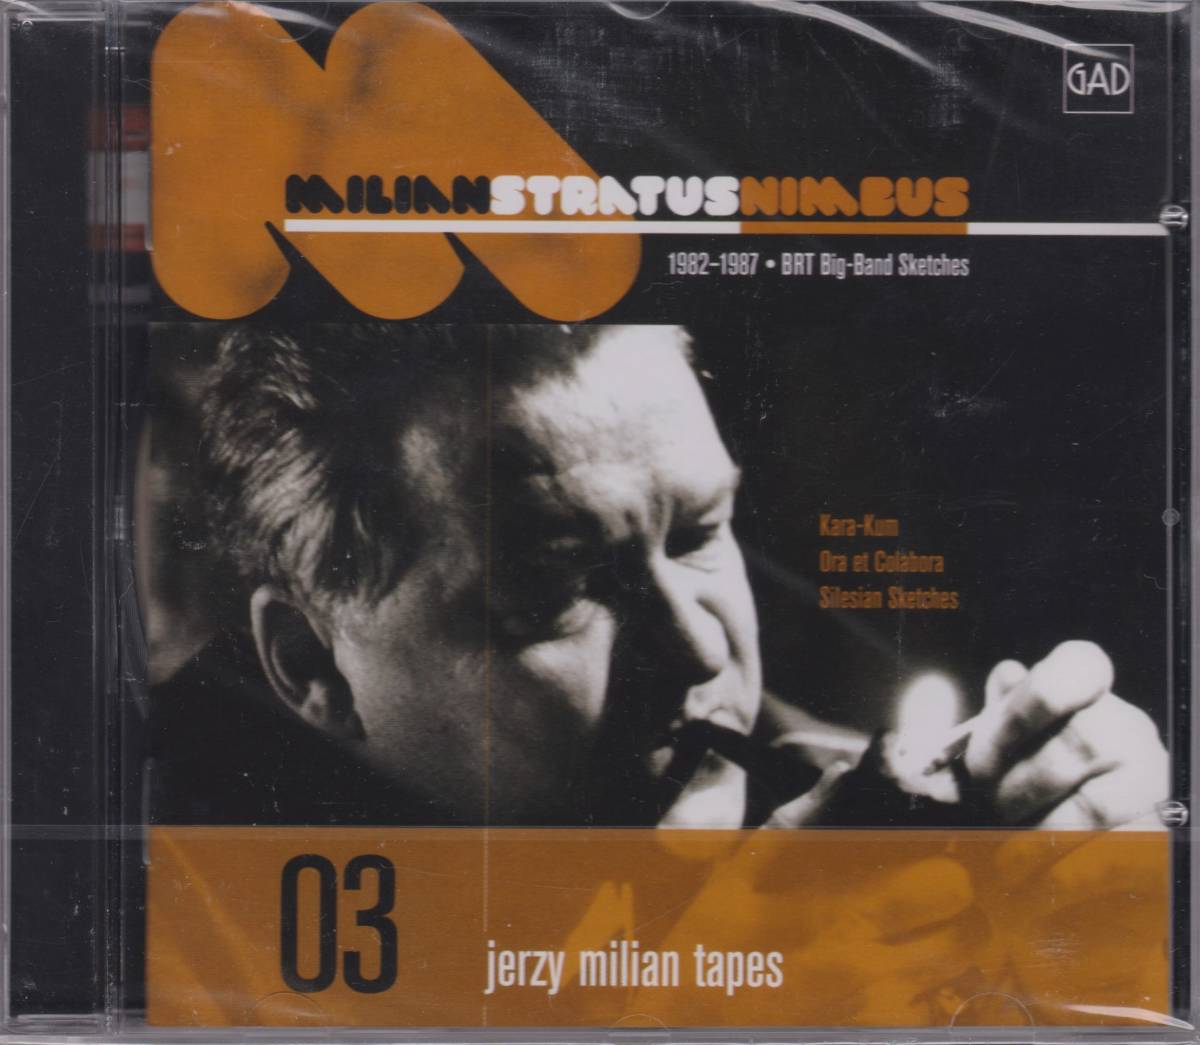 Jerzy Milian イェジー・ミリアン - Stratus Nimbus 未発表音源CD_画像1